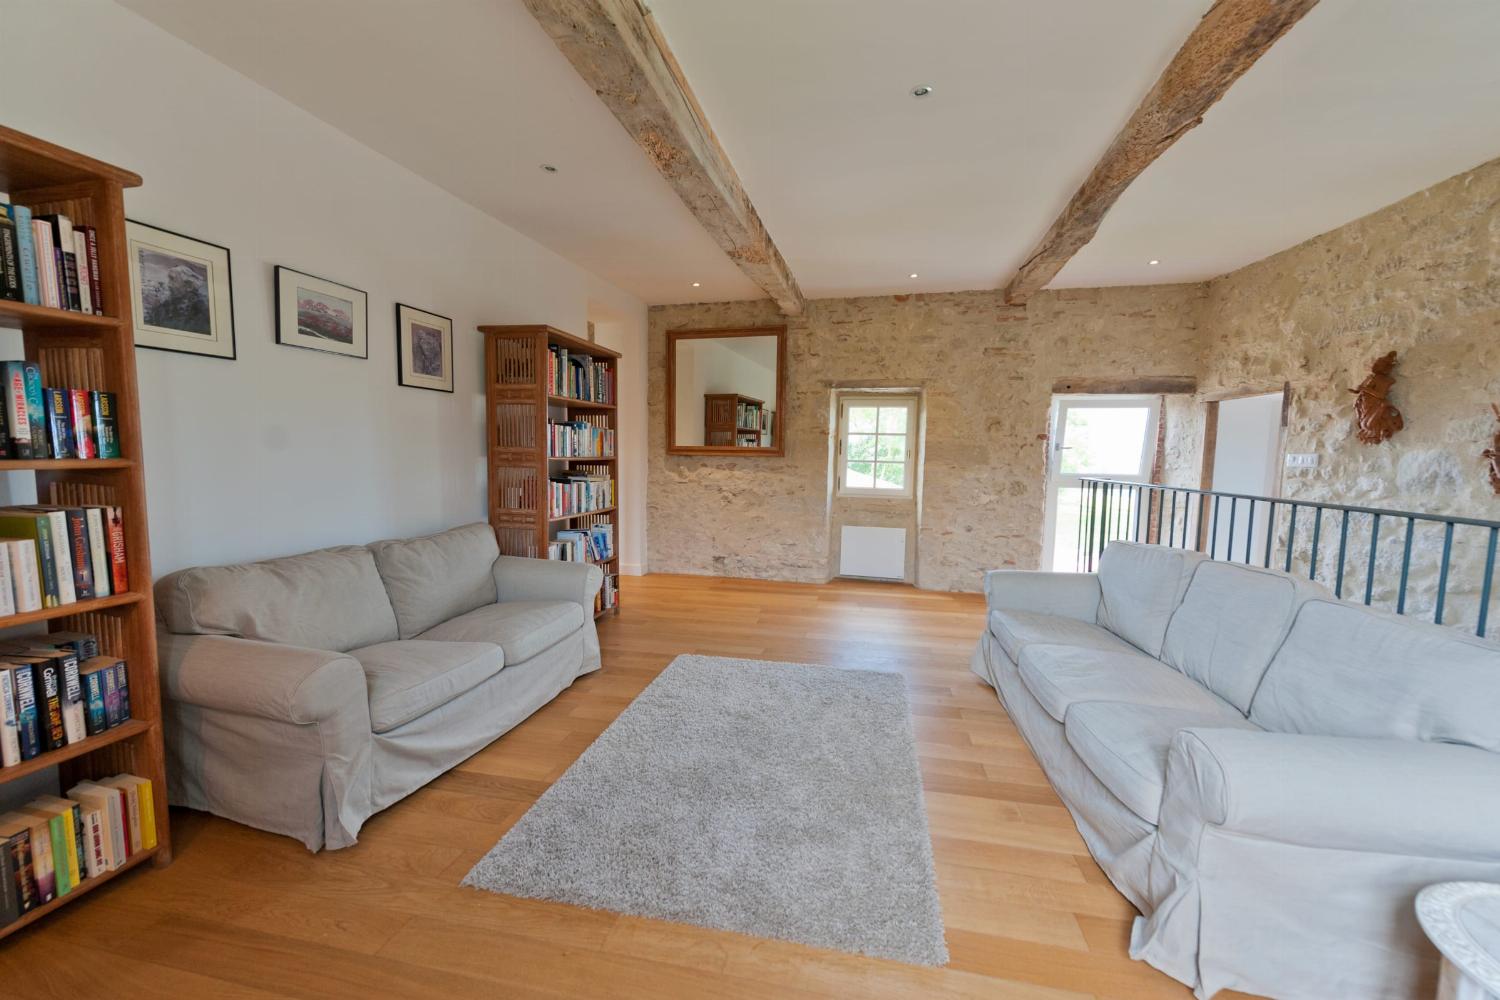 Living room | Rental home in the Tarn